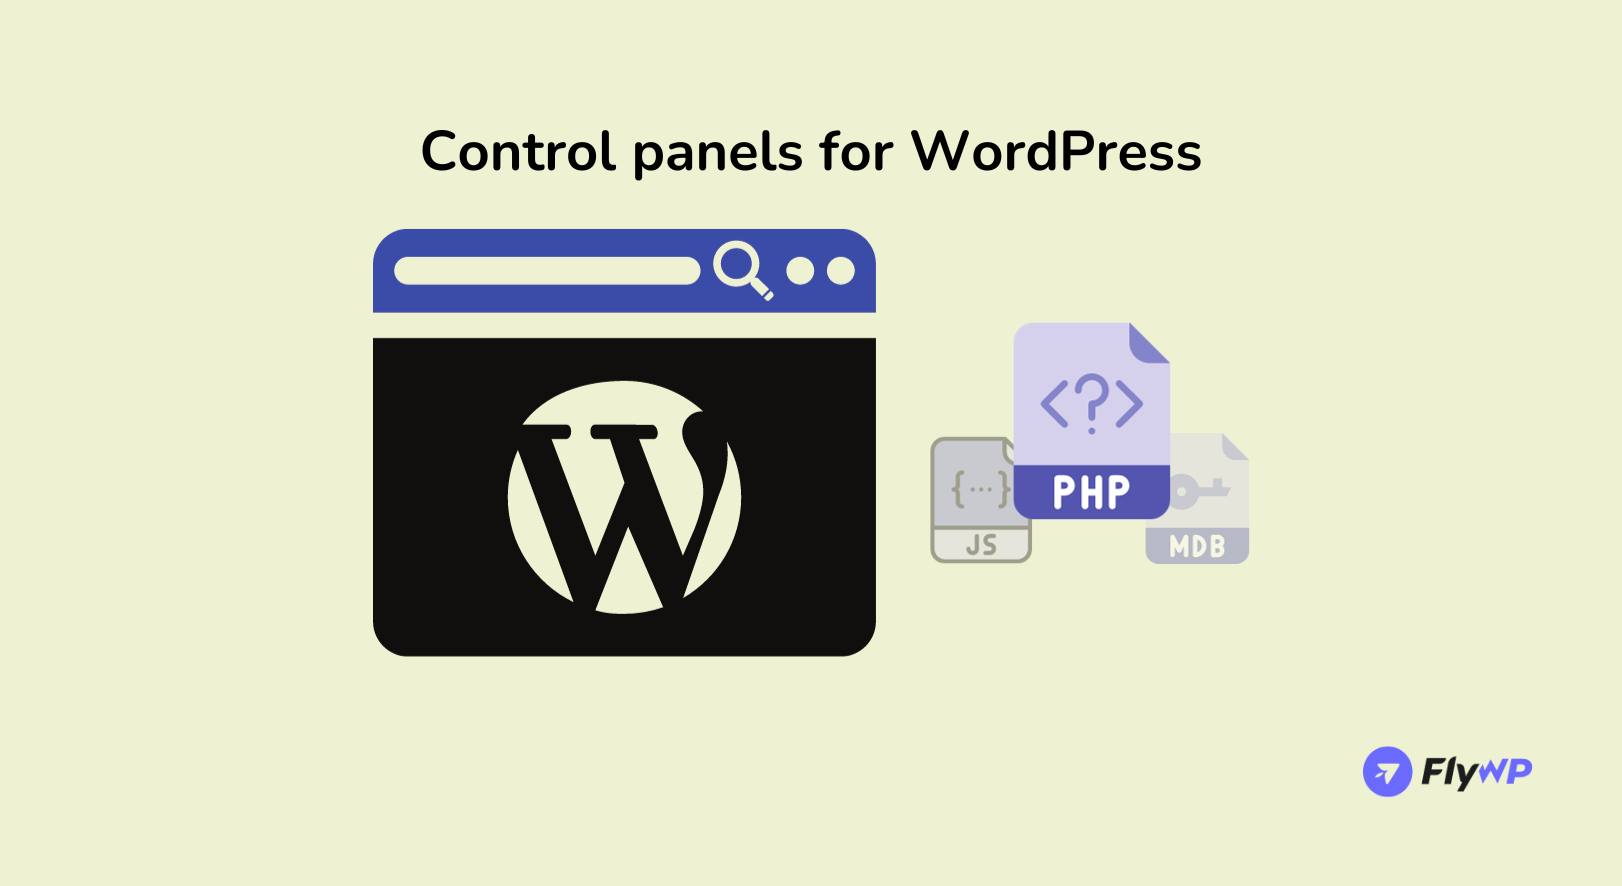 Control panels for WordPress